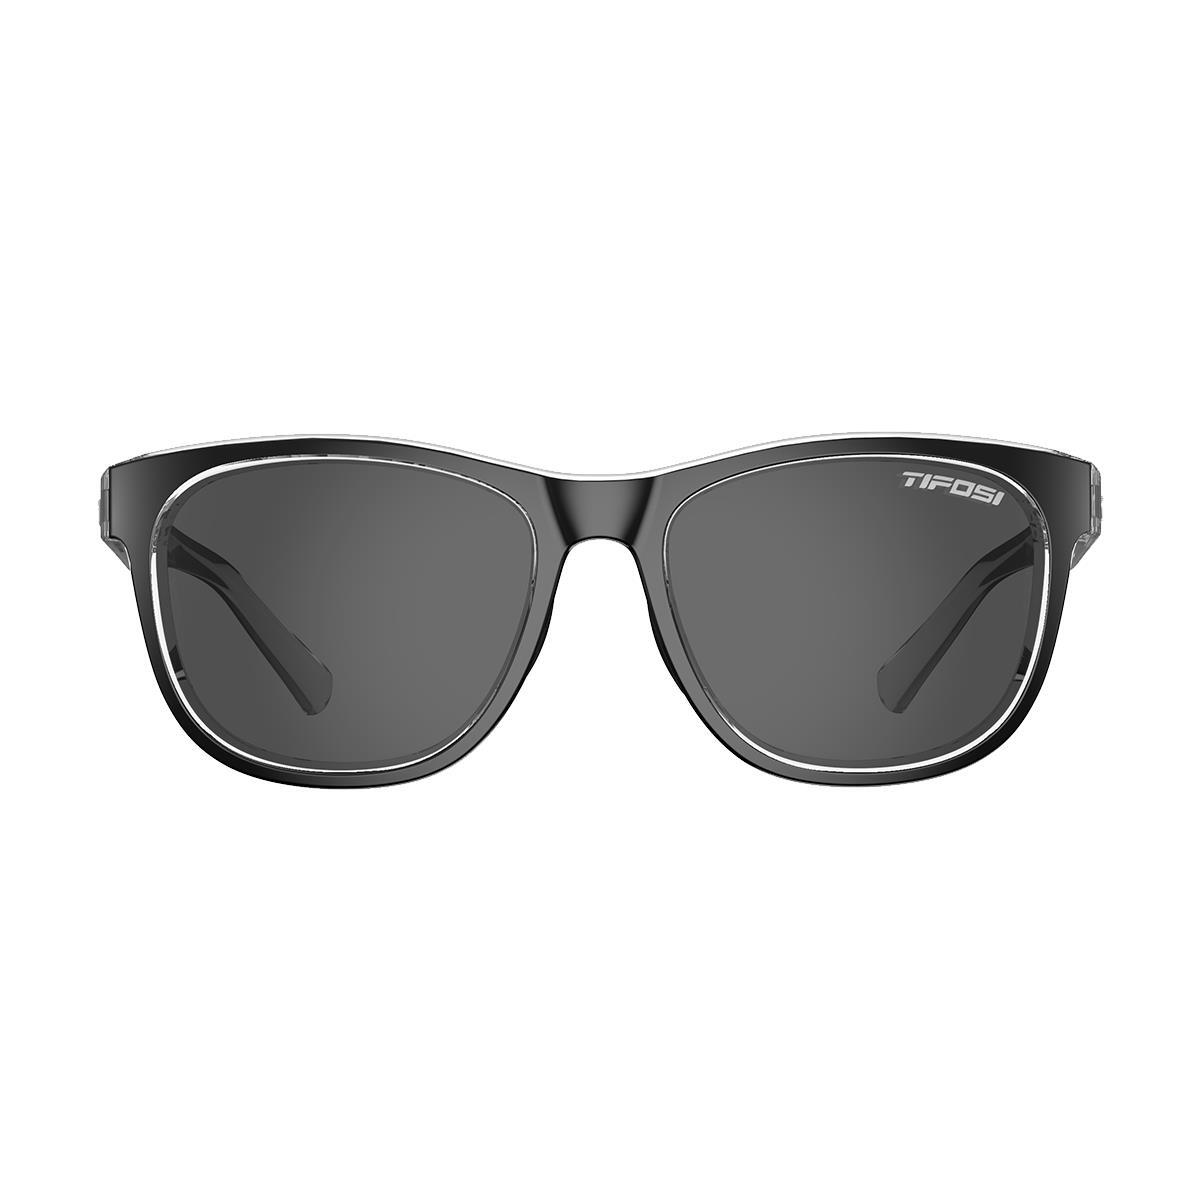 Swank Single Lens Sunglasses Casual Electric Blue/Smoke Bright Blue 2/4